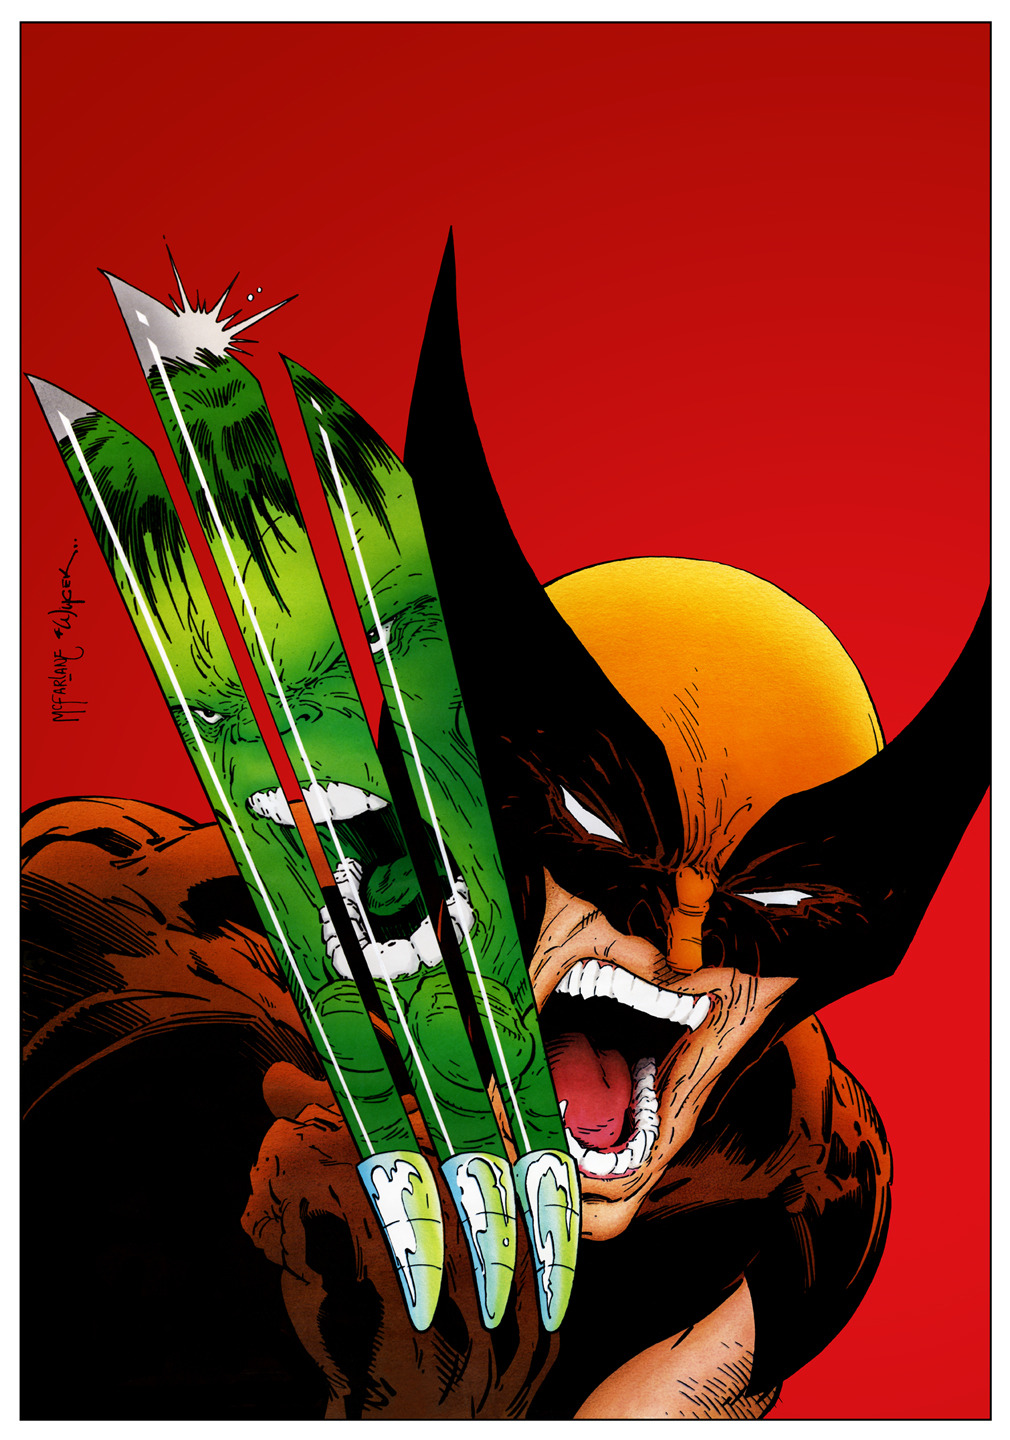 Hulk Vs Wolverine Wallpapers